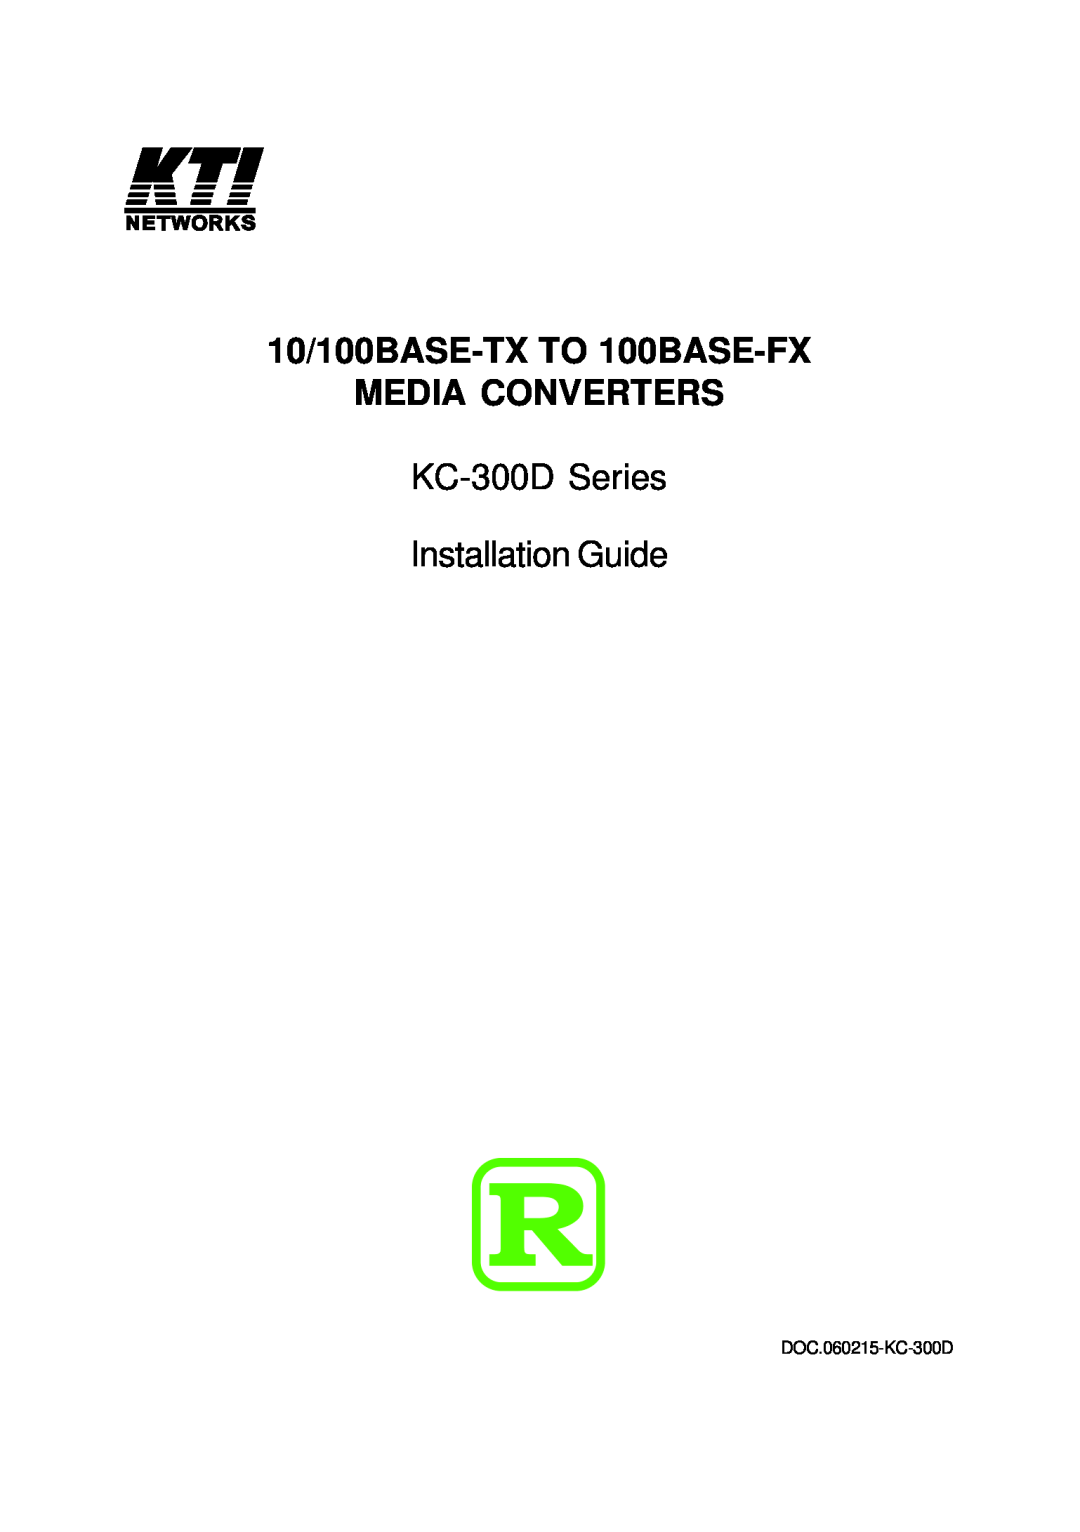 KTI Networks manual 10/100BASE-TX TO 100BASE-FX MEDIA CONVERTERS, KC-300D Series Installation Guide, DOC.060215-KC-300D 